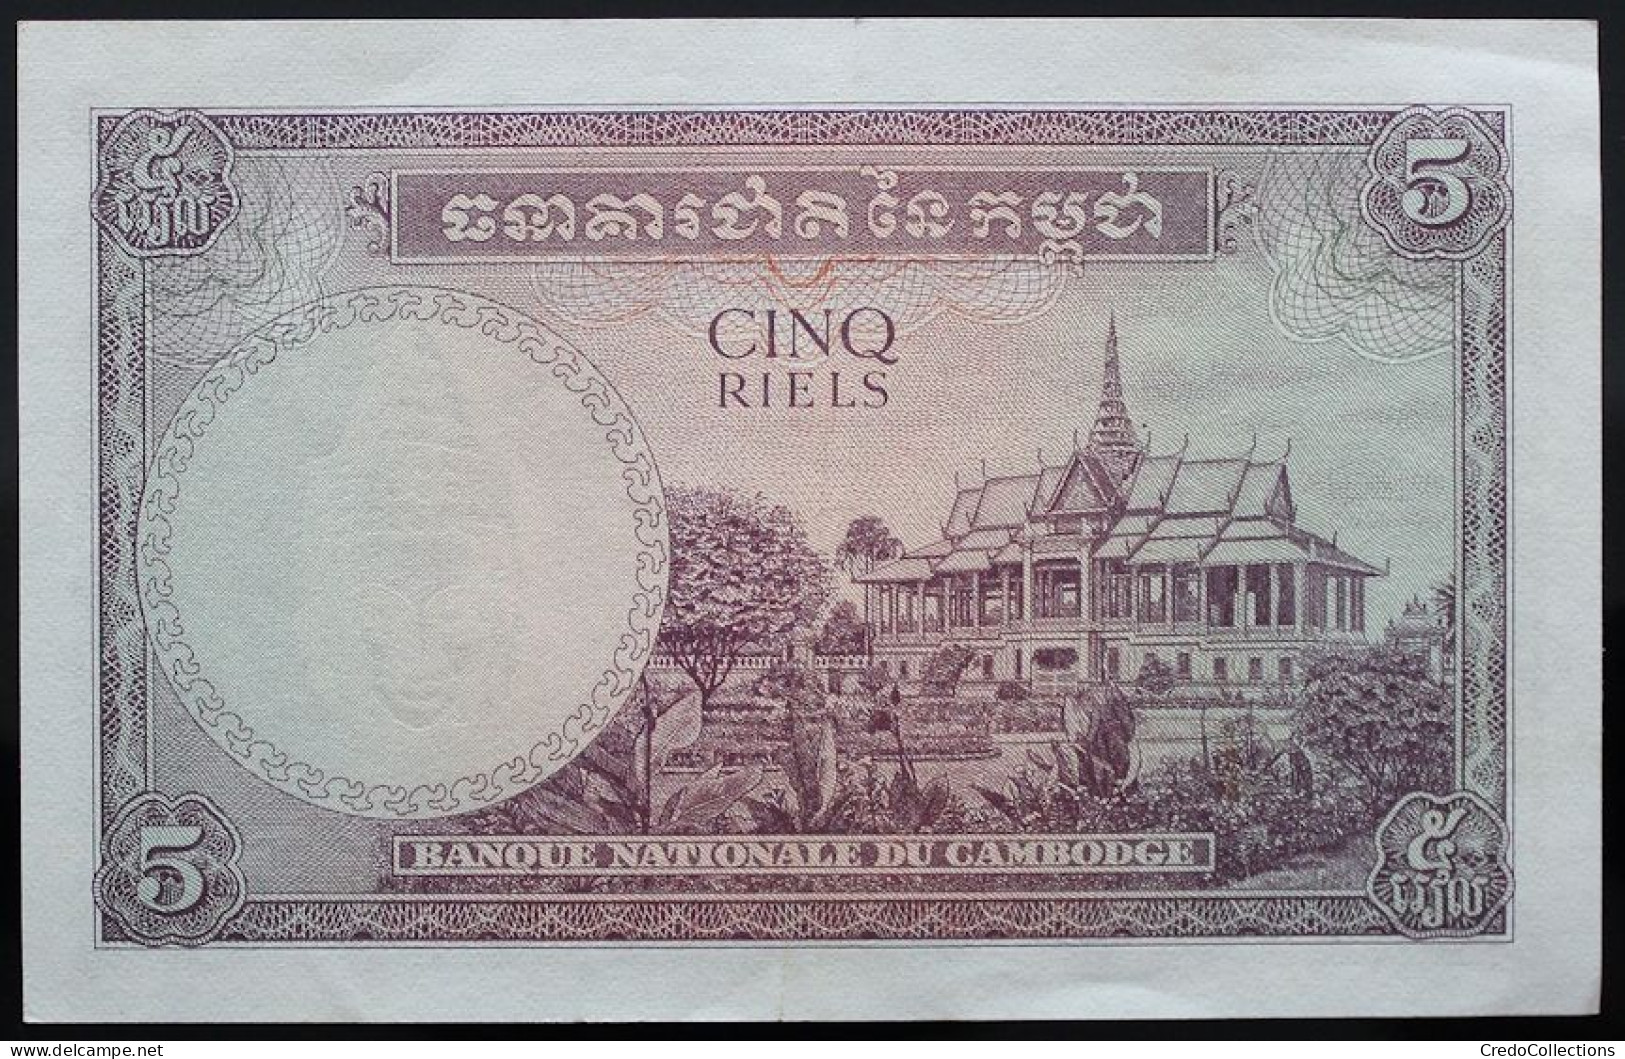 Cambodge - 5 Riels - 1955 - PICK 2a - SUP+ - Cambodge